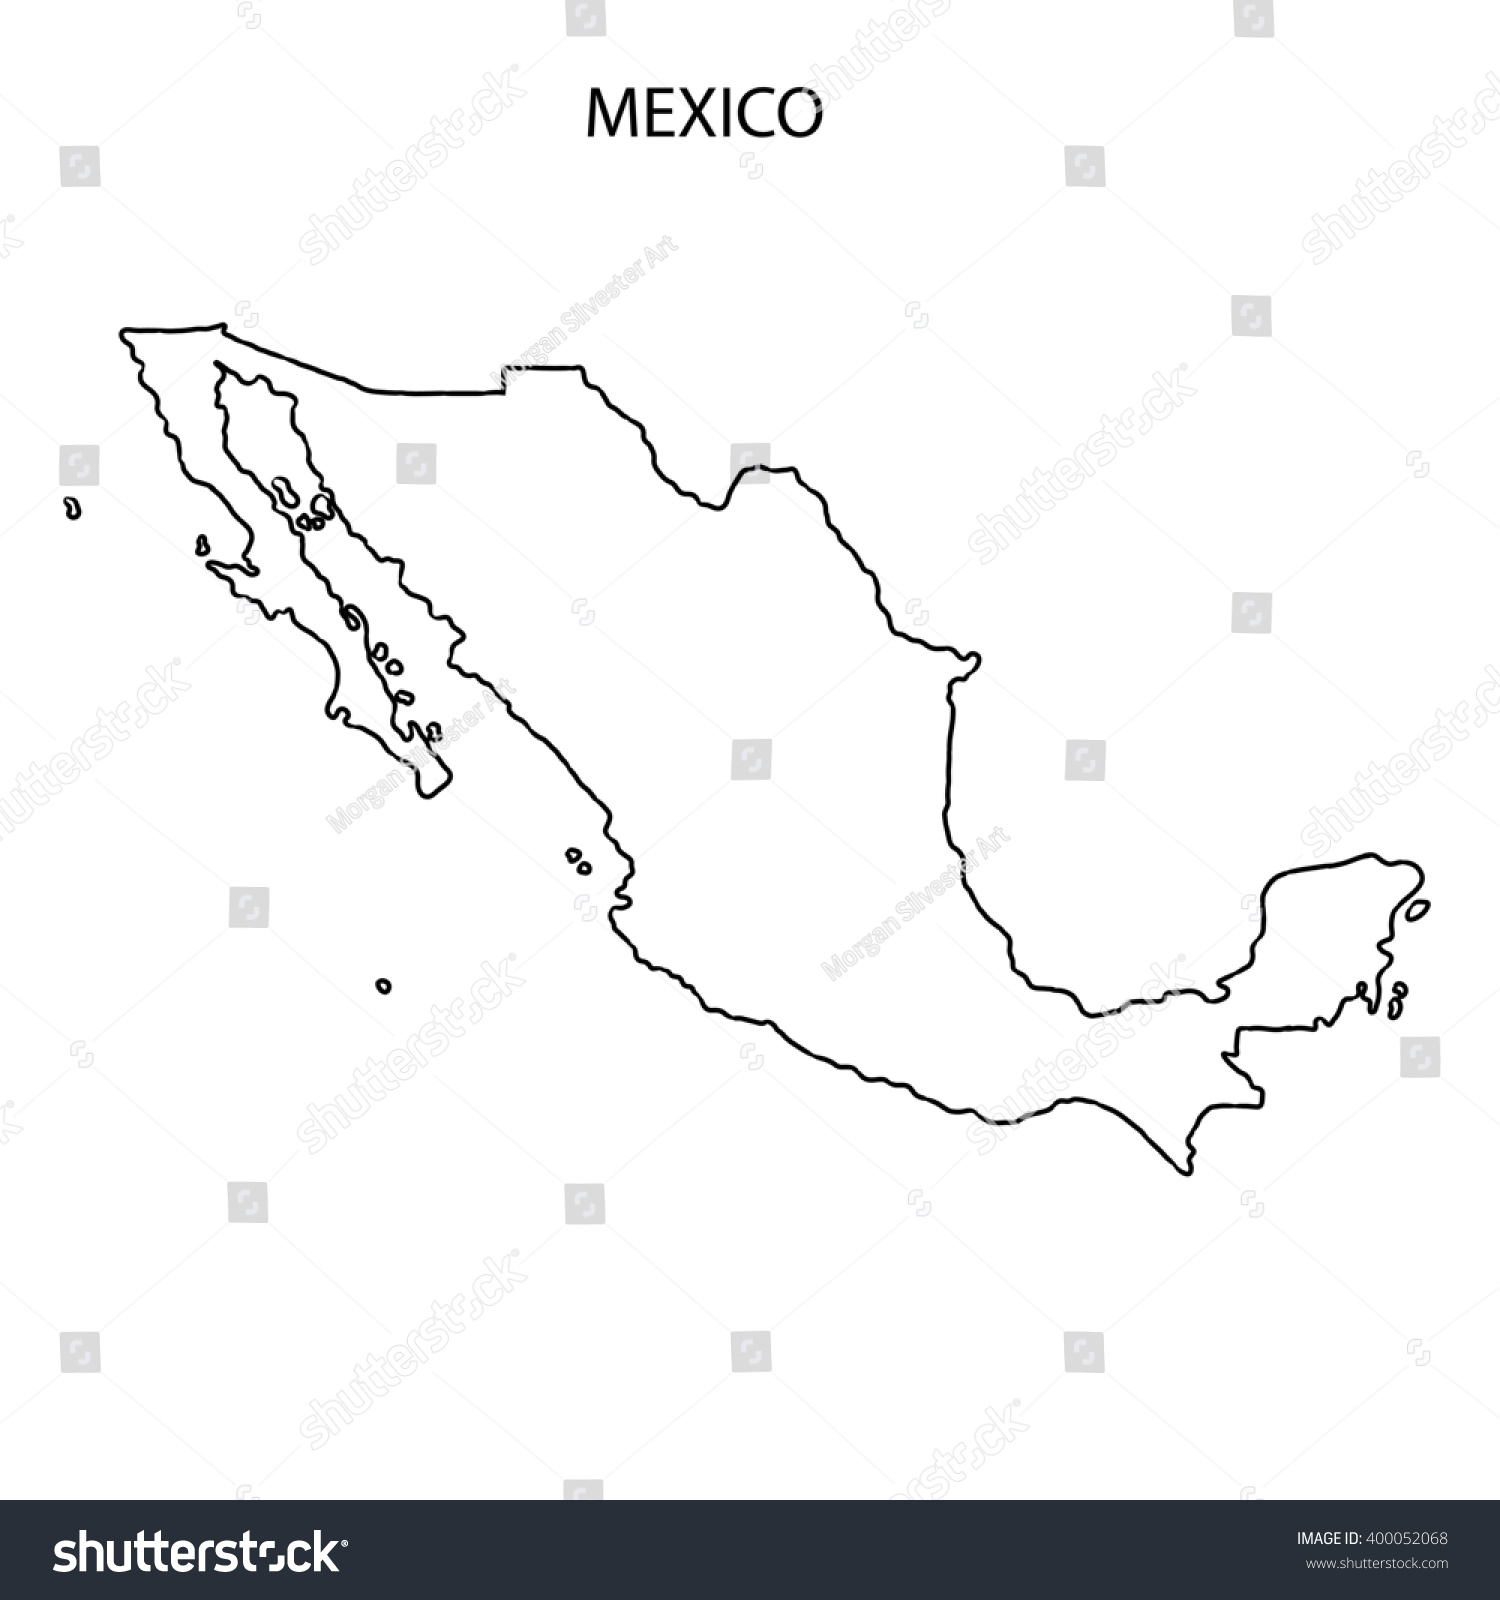 Mexico Map Outline - Royalty Free Stock Photo 400052068 - Avopix.com